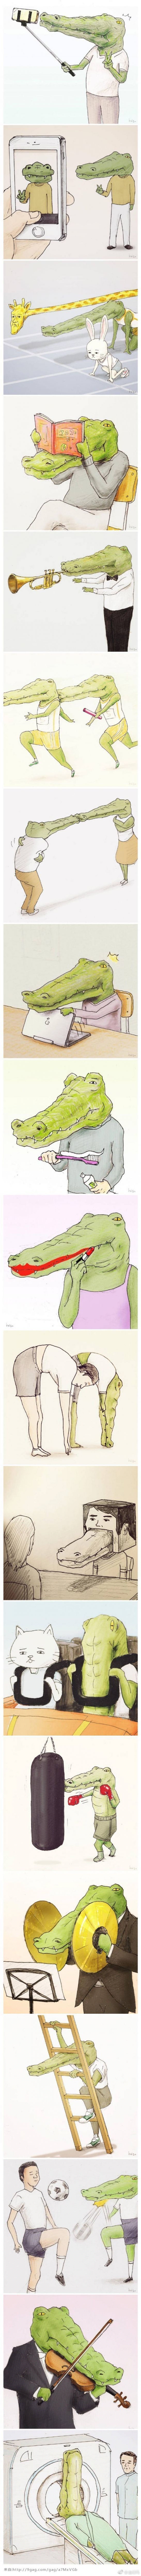 Crocodile's daily life